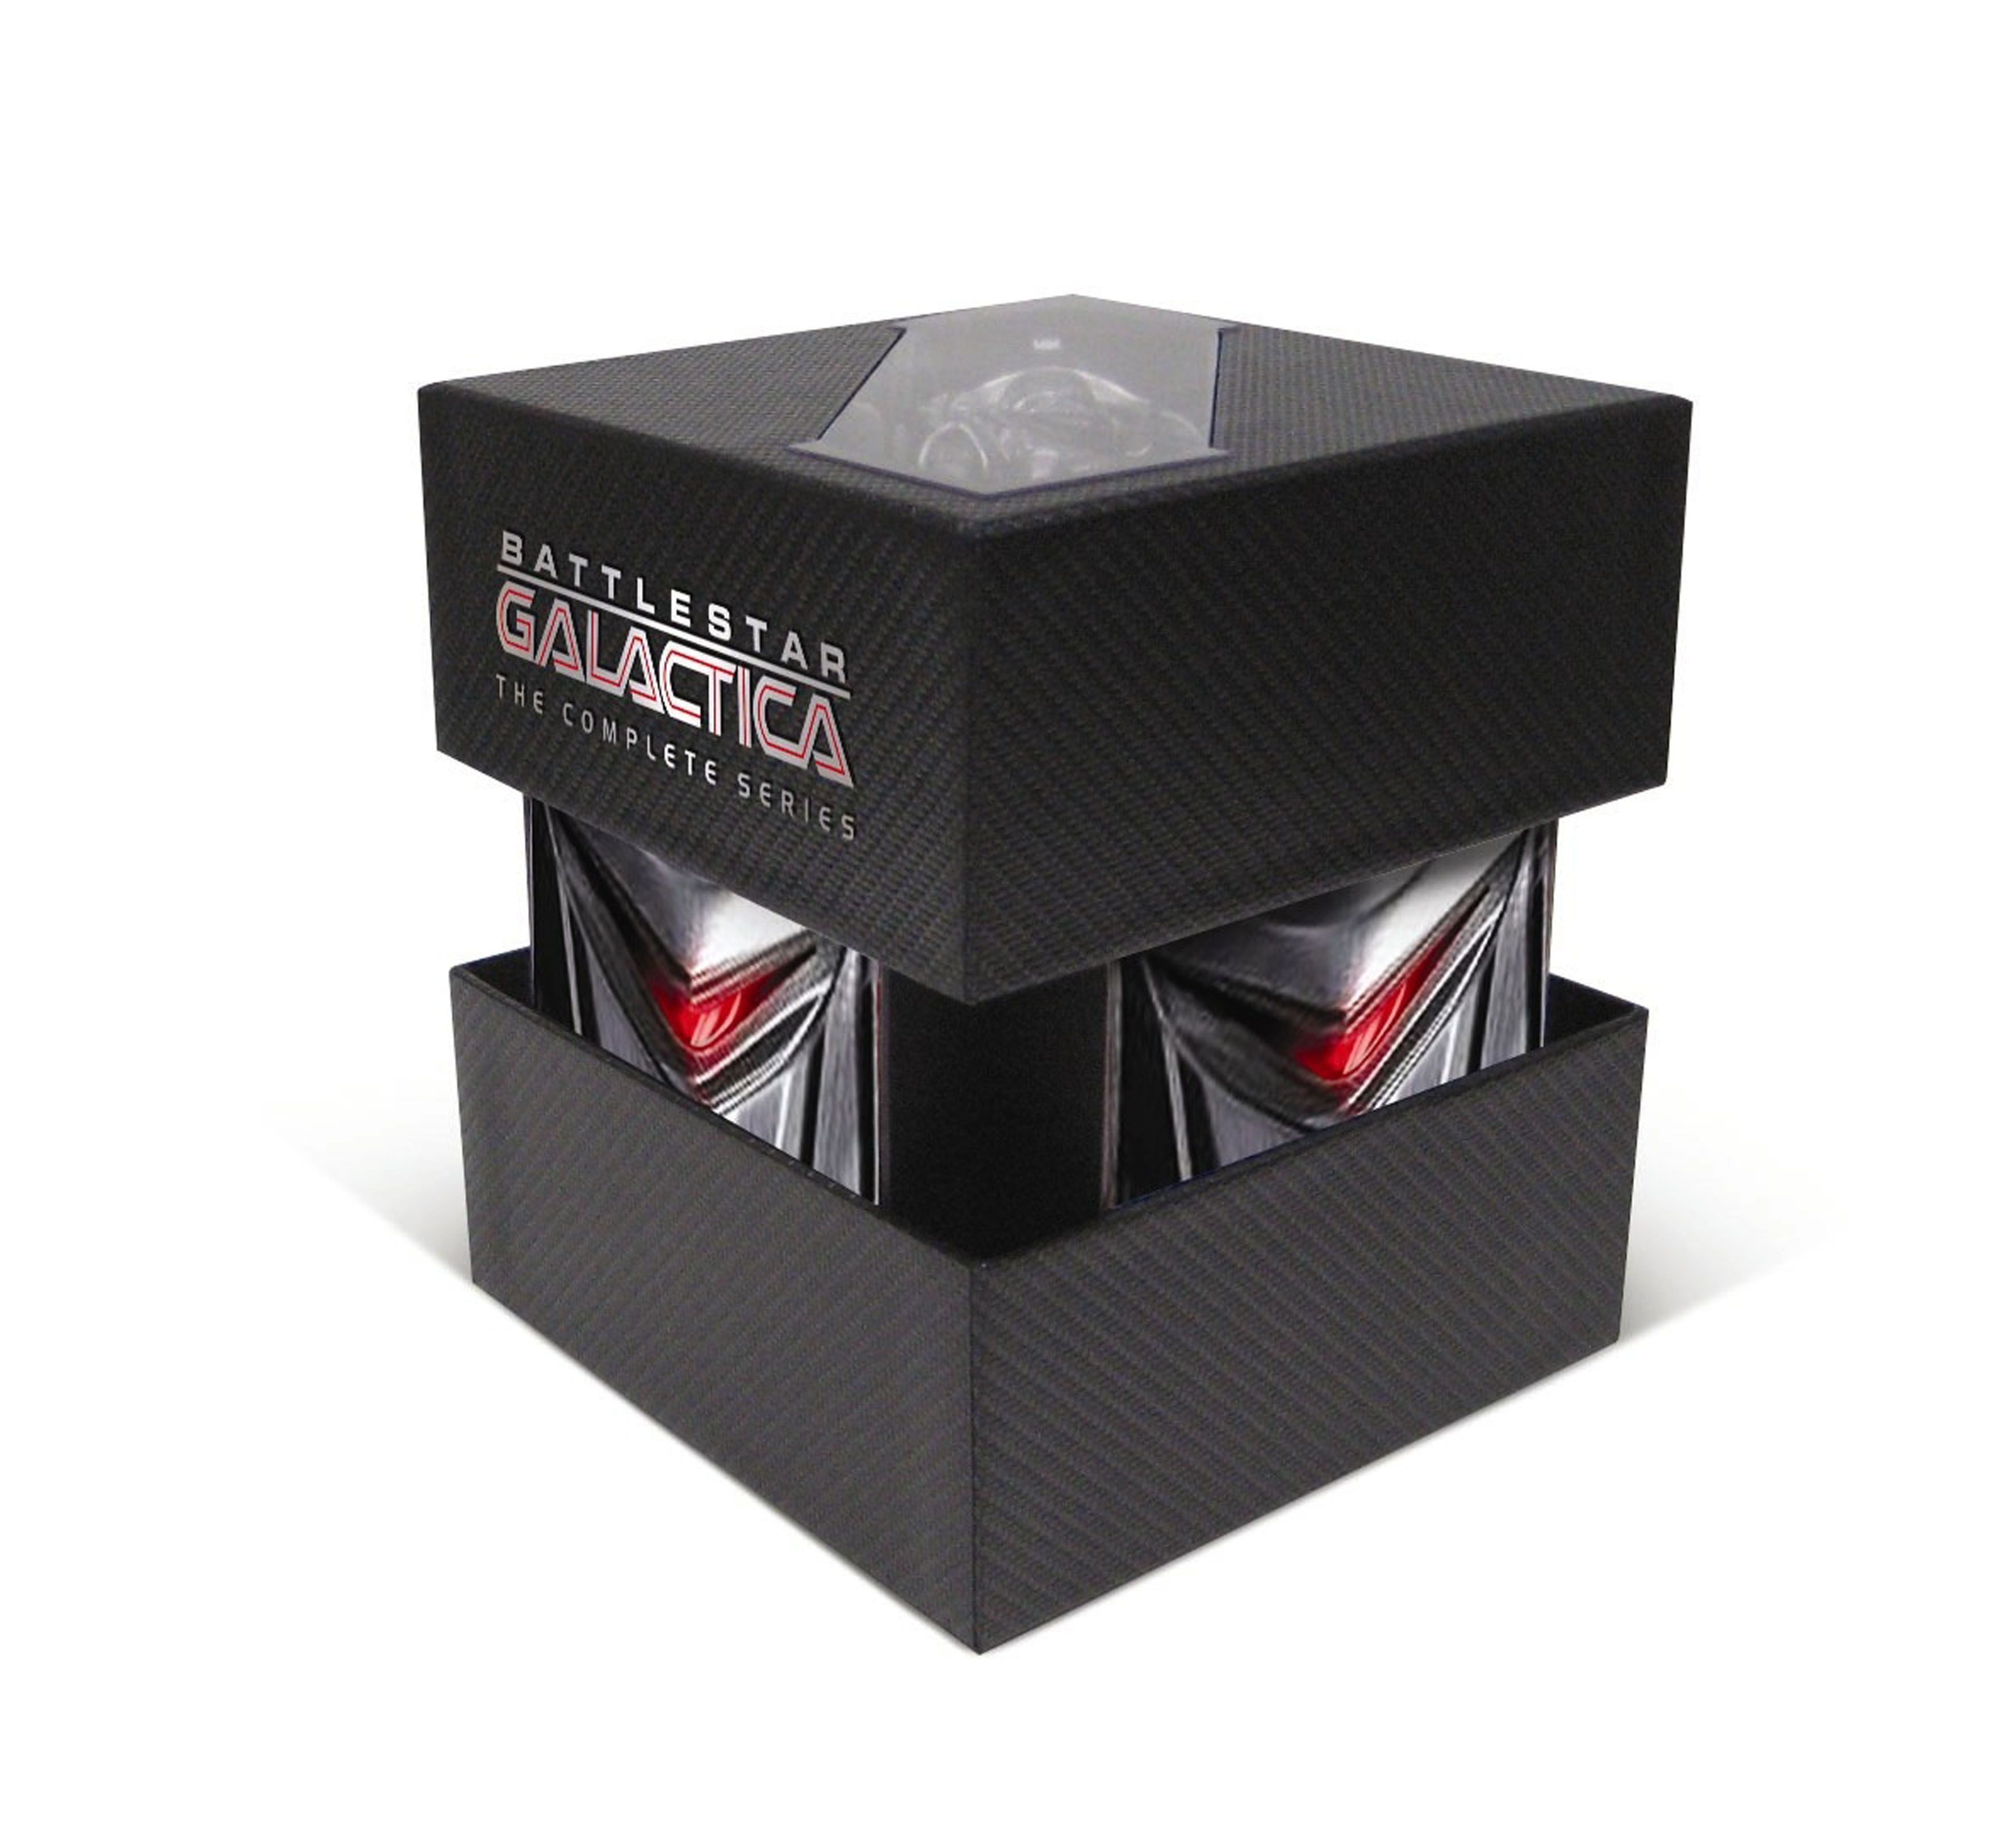 Battlestar Galactica: The Complete Series DVD Blu-ray #1